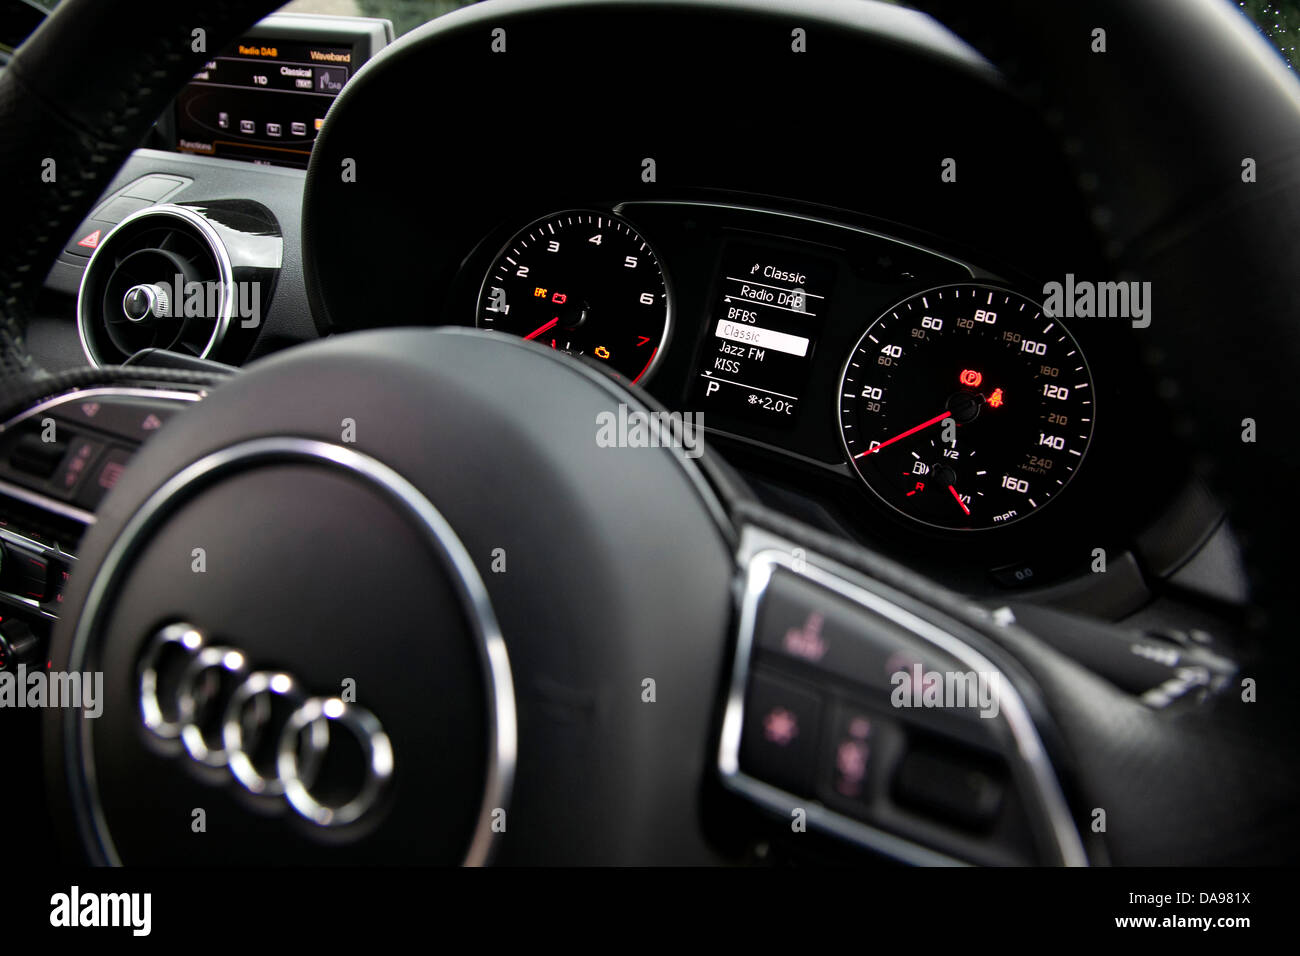 Audi A1 DAB Radio Stock Photo - Alamy